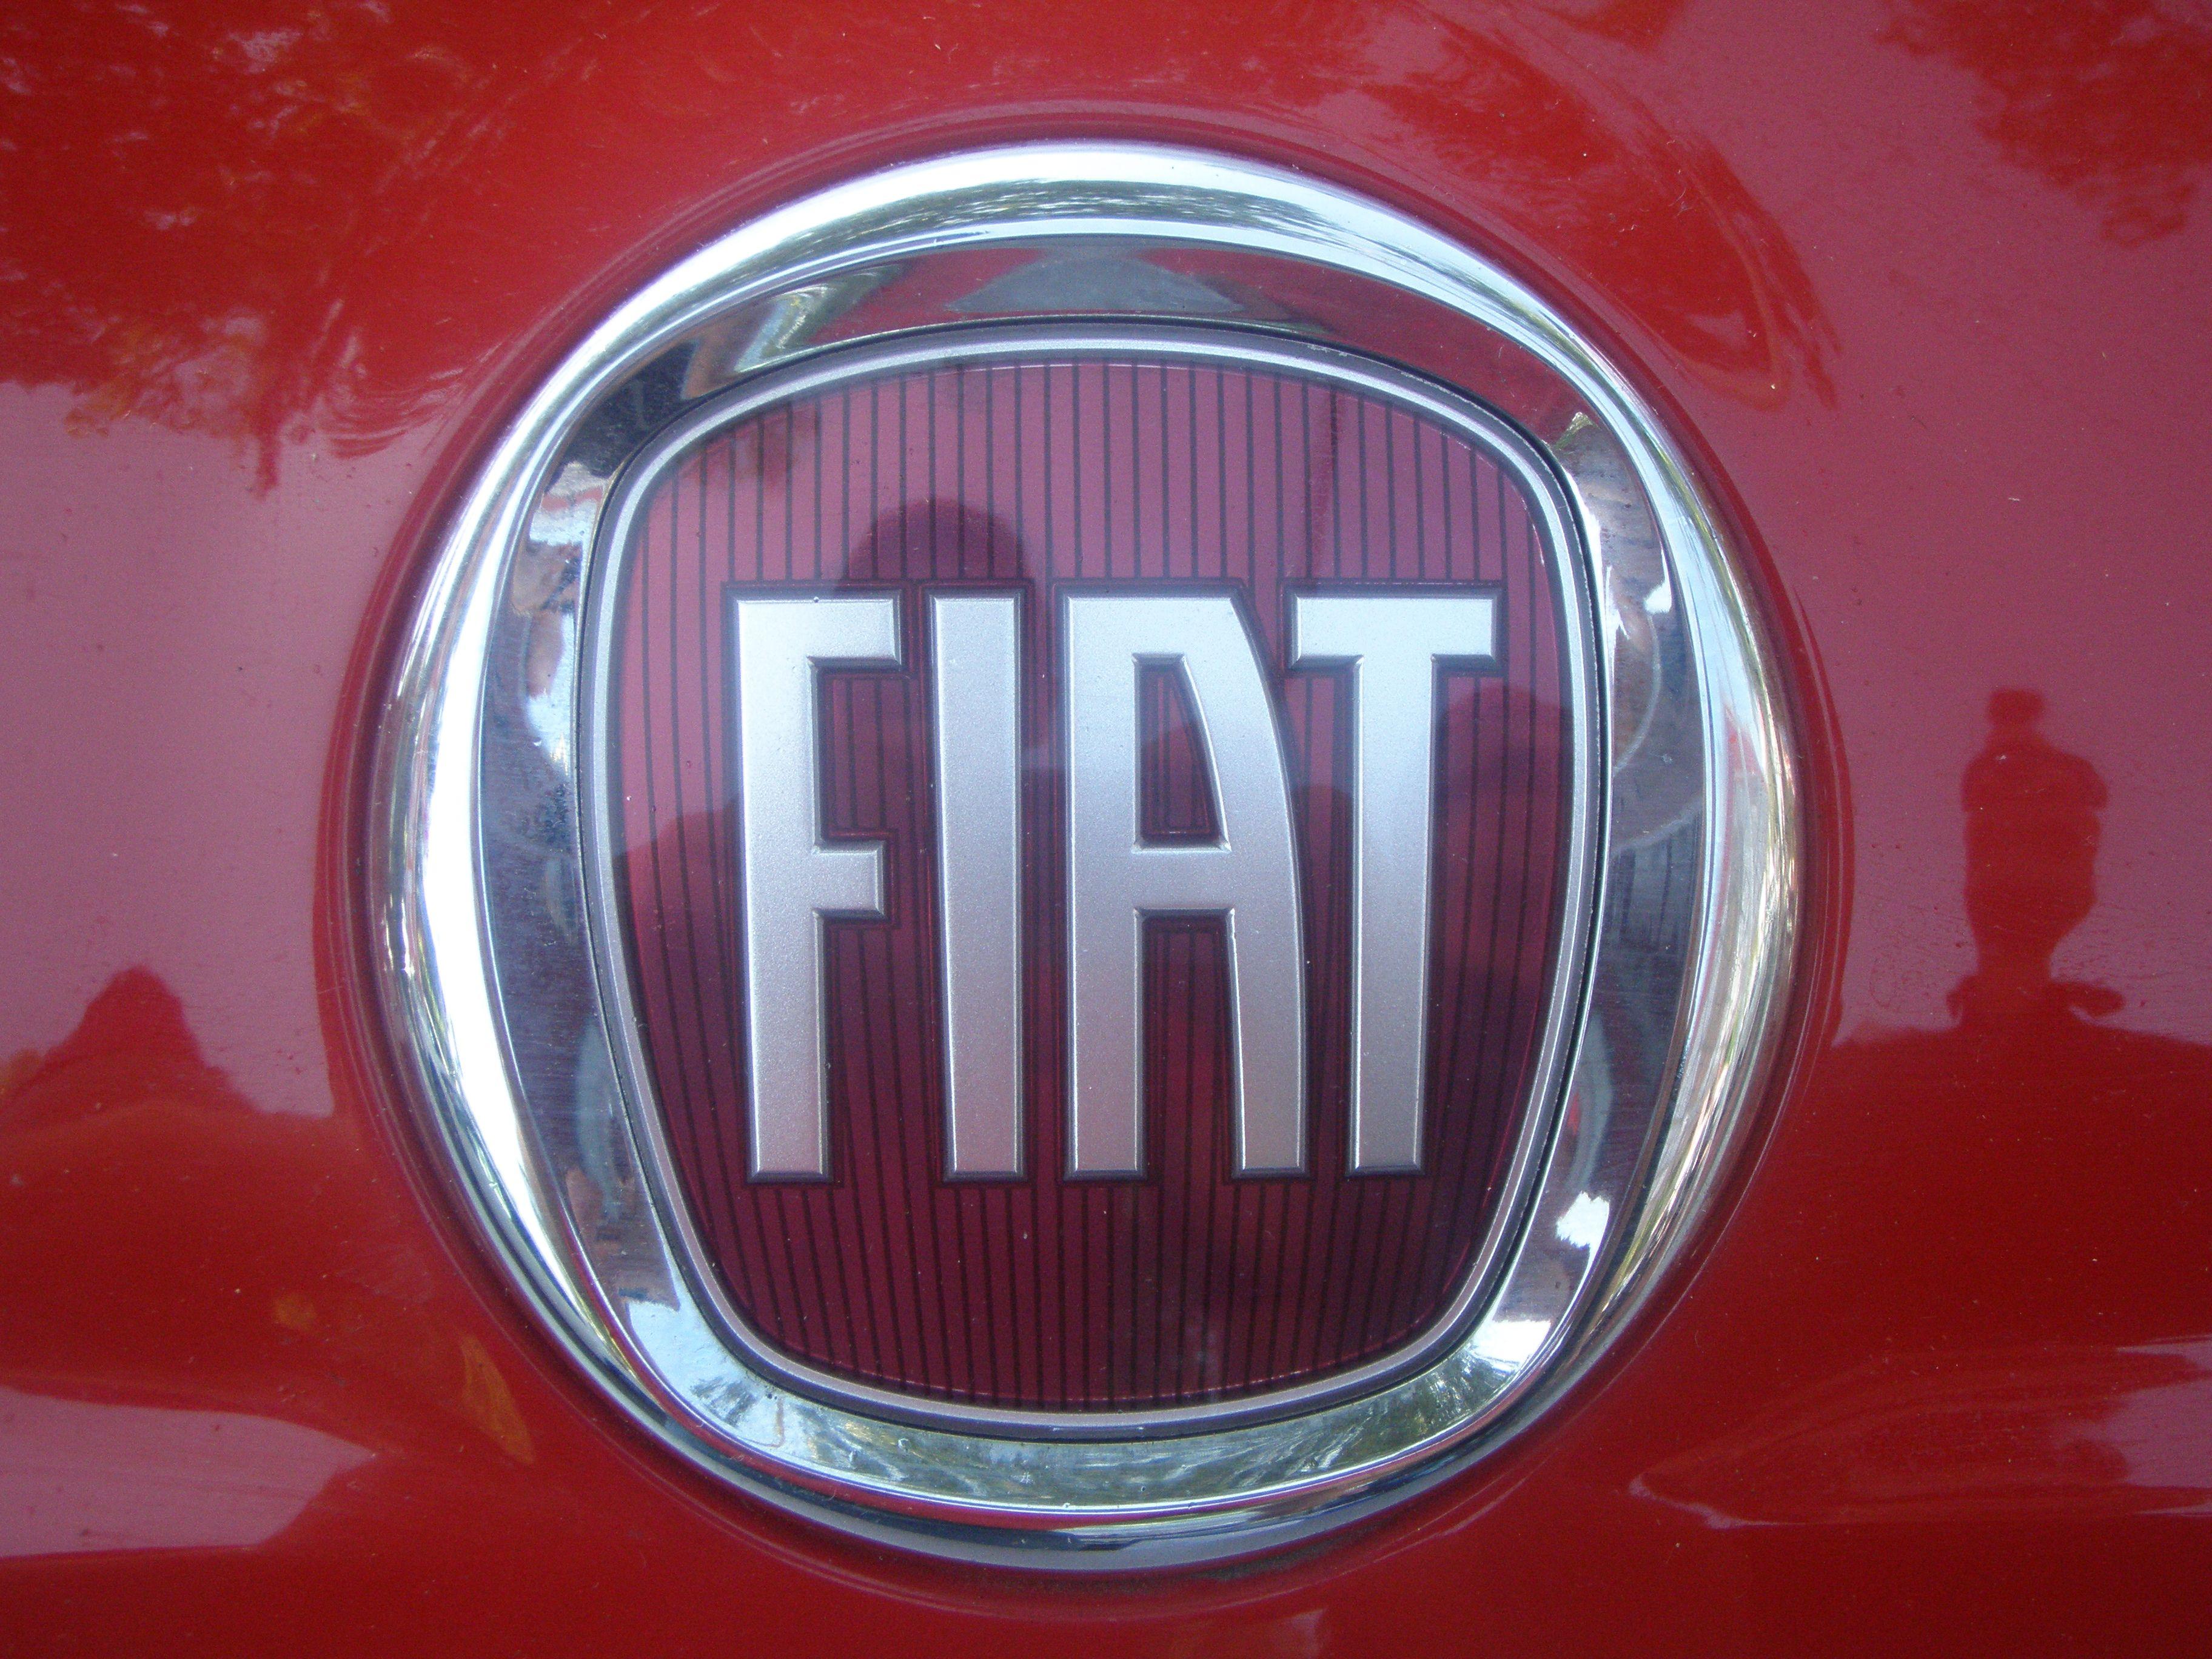 Red Fiat Logo - Fiat Logo, Fiat Car Symbol Meaning and History. Car Brand Names.com